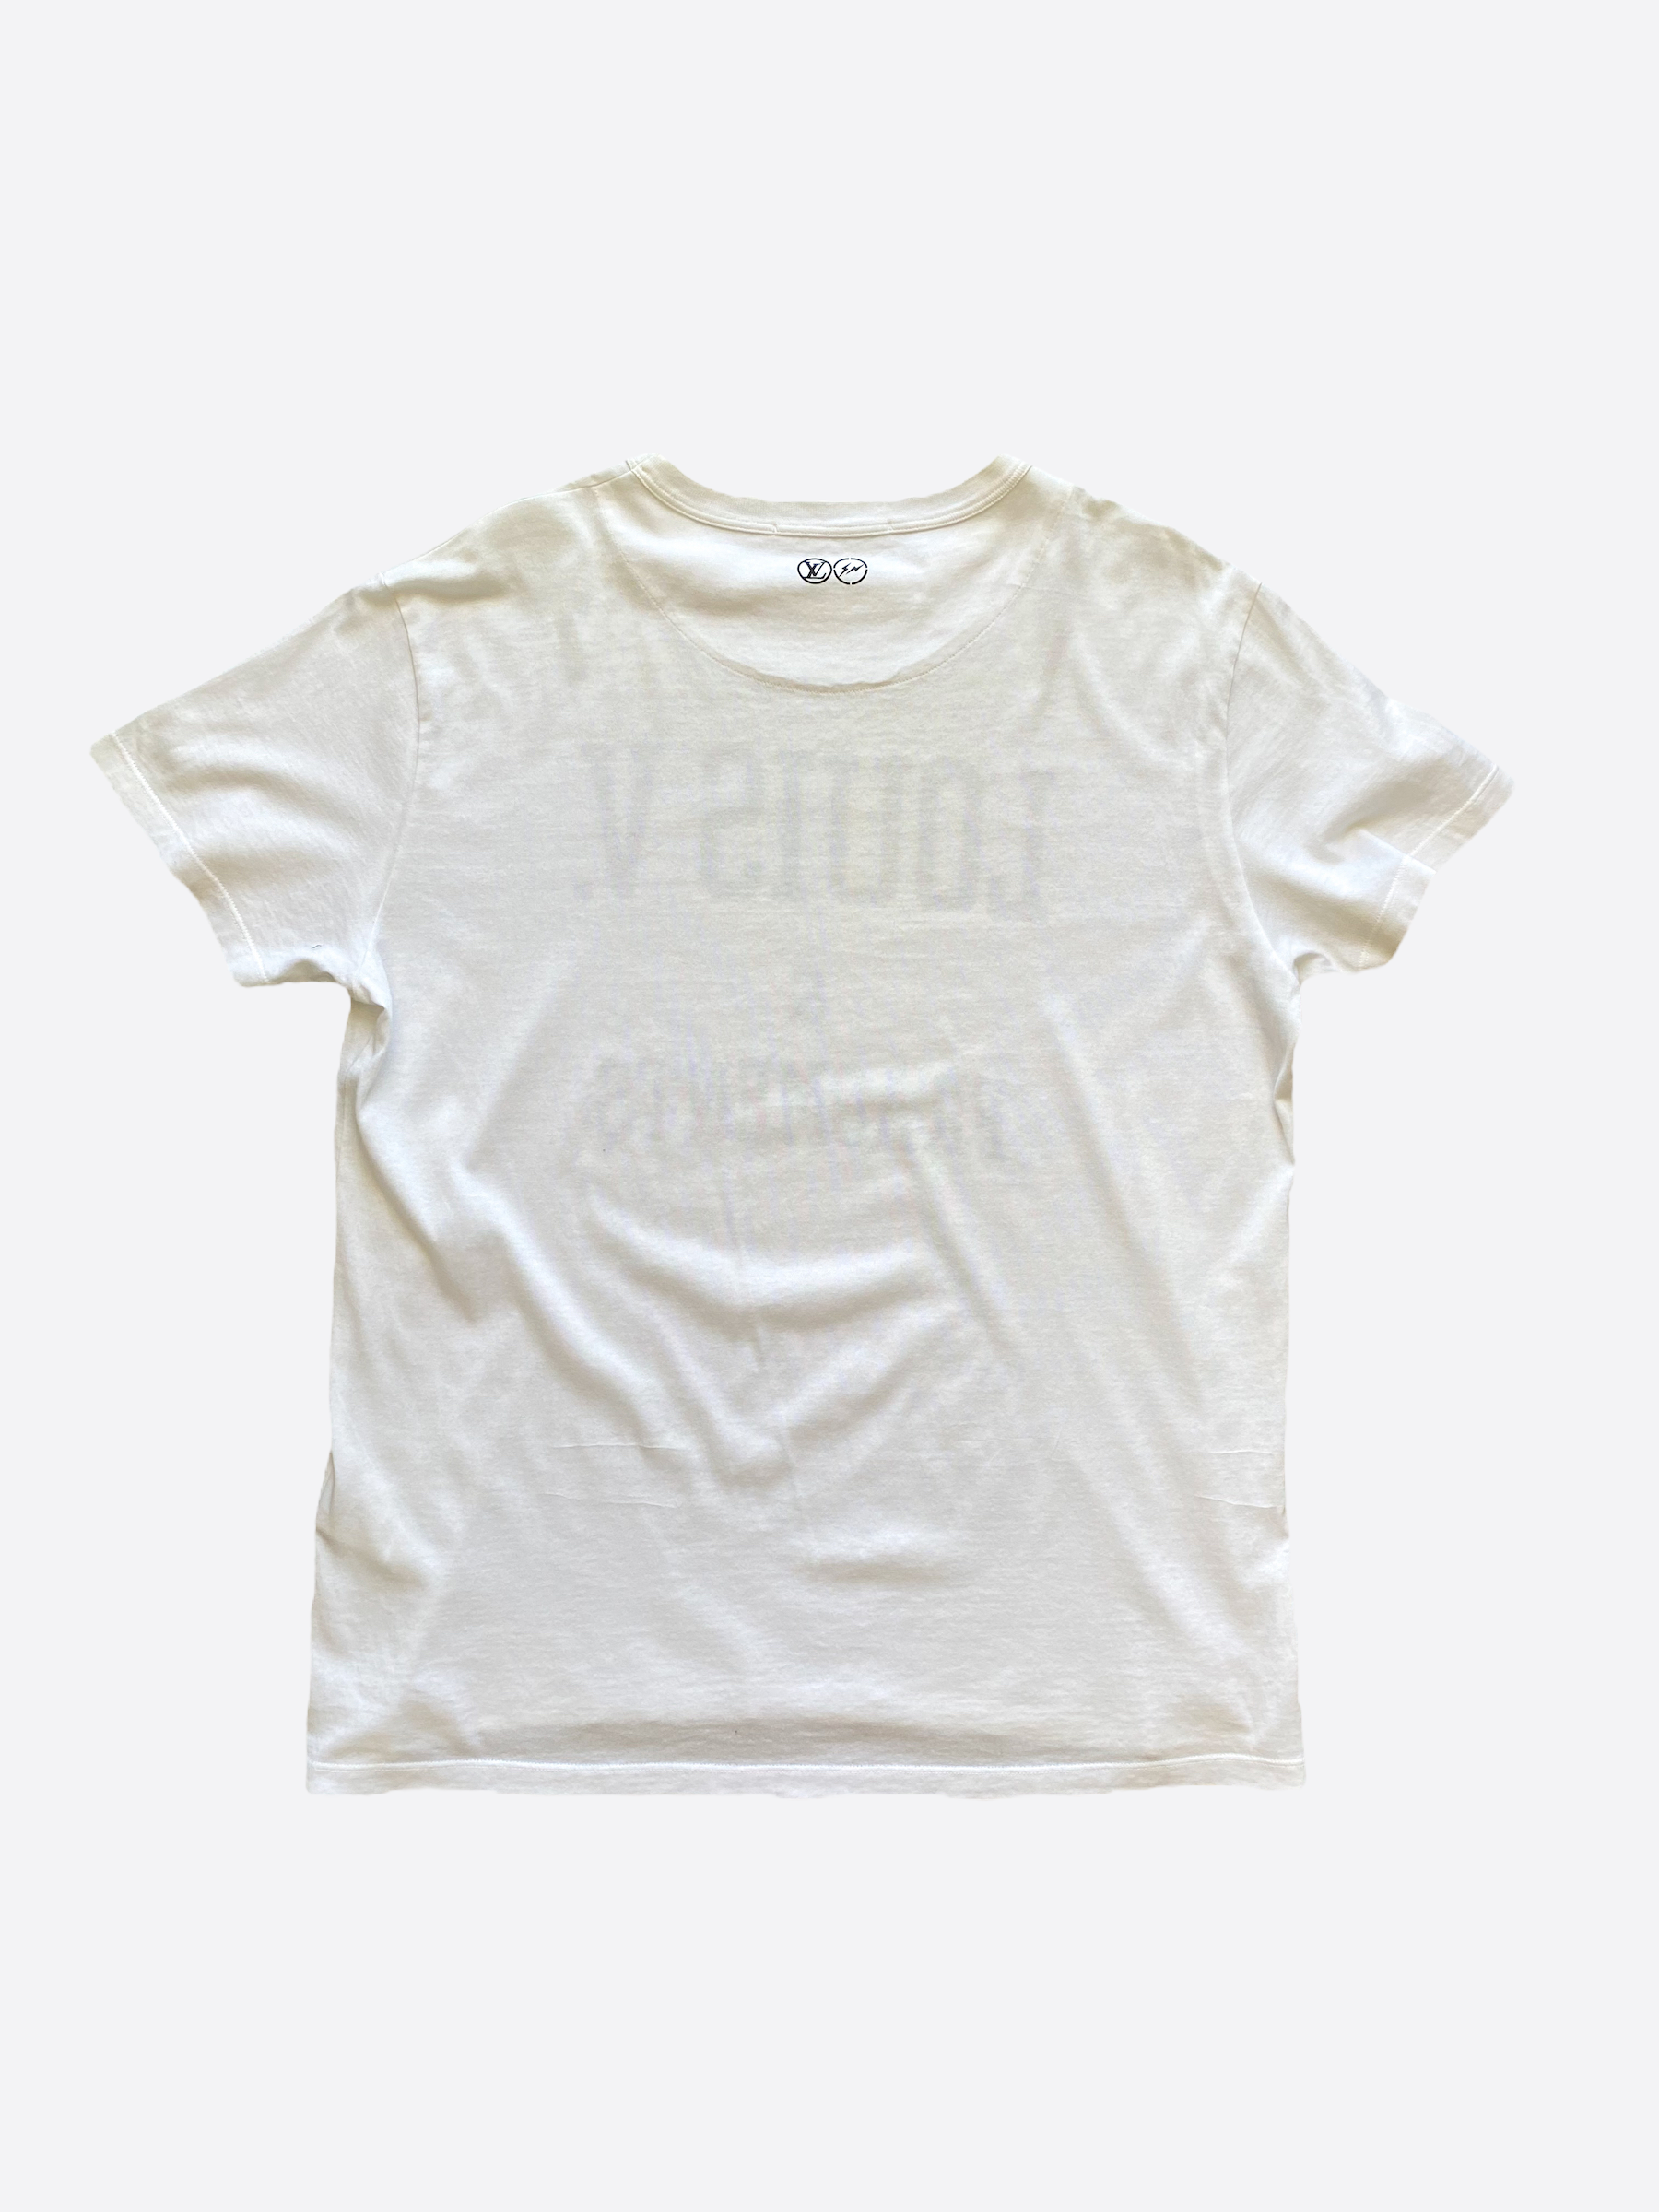 Louis Vuitton White Fragment Design T-Shirt